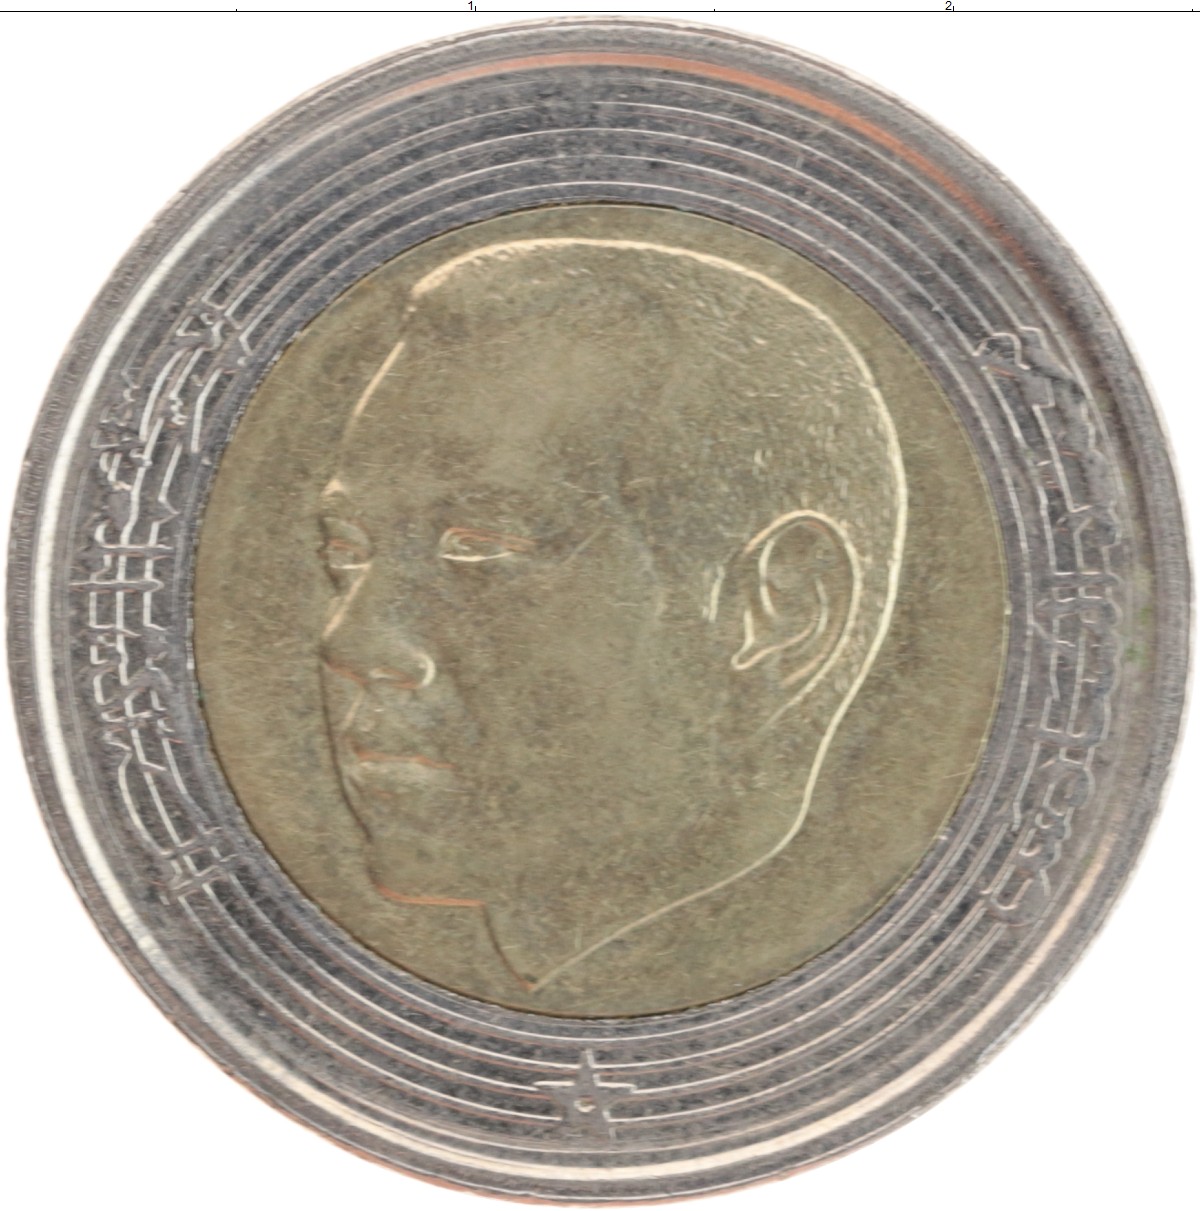 345 дирхам. Монета Марокко 5 дирхам 2002 Биметалл XF. 5 Дирхам монета. 5 Дирхам Марокко. Монеты Марокко 5 дирхам.